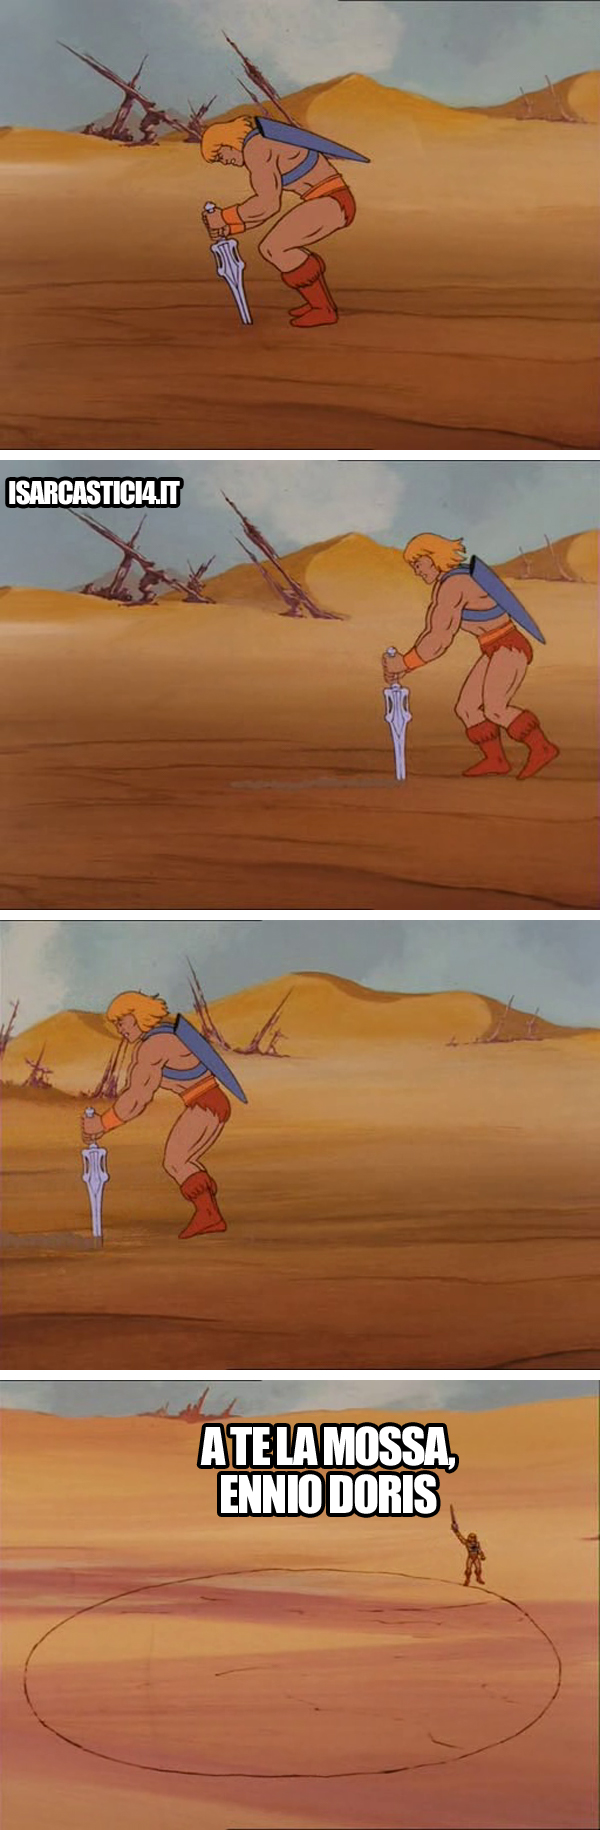 MOTU, Masters Of The Universe meme ita - He-Man